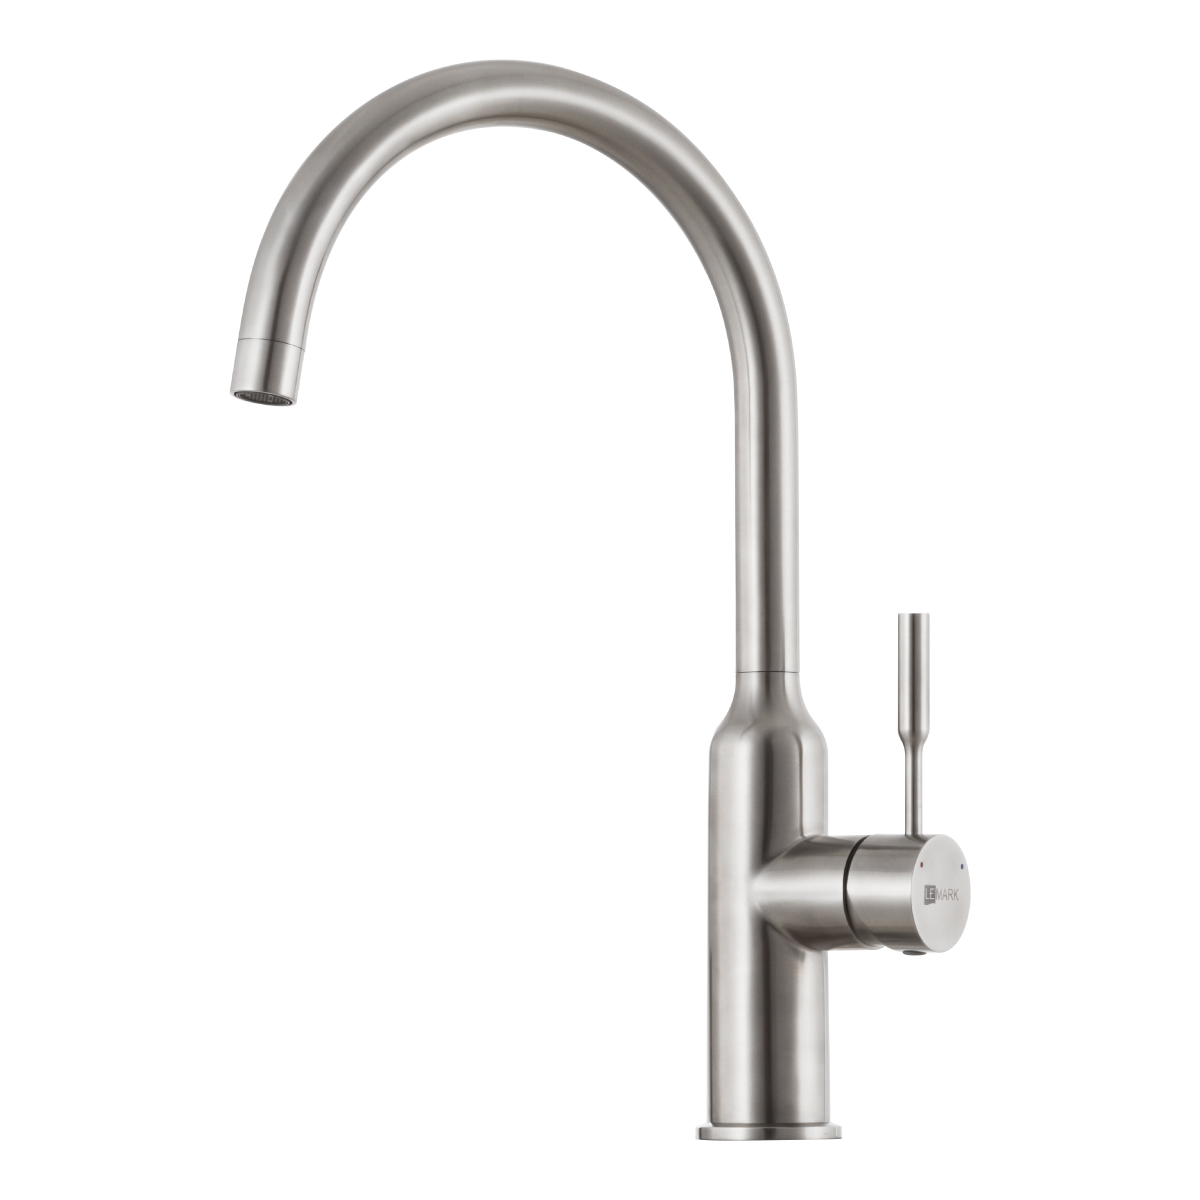 LM5079S Kitchen faucet
with swivel spout